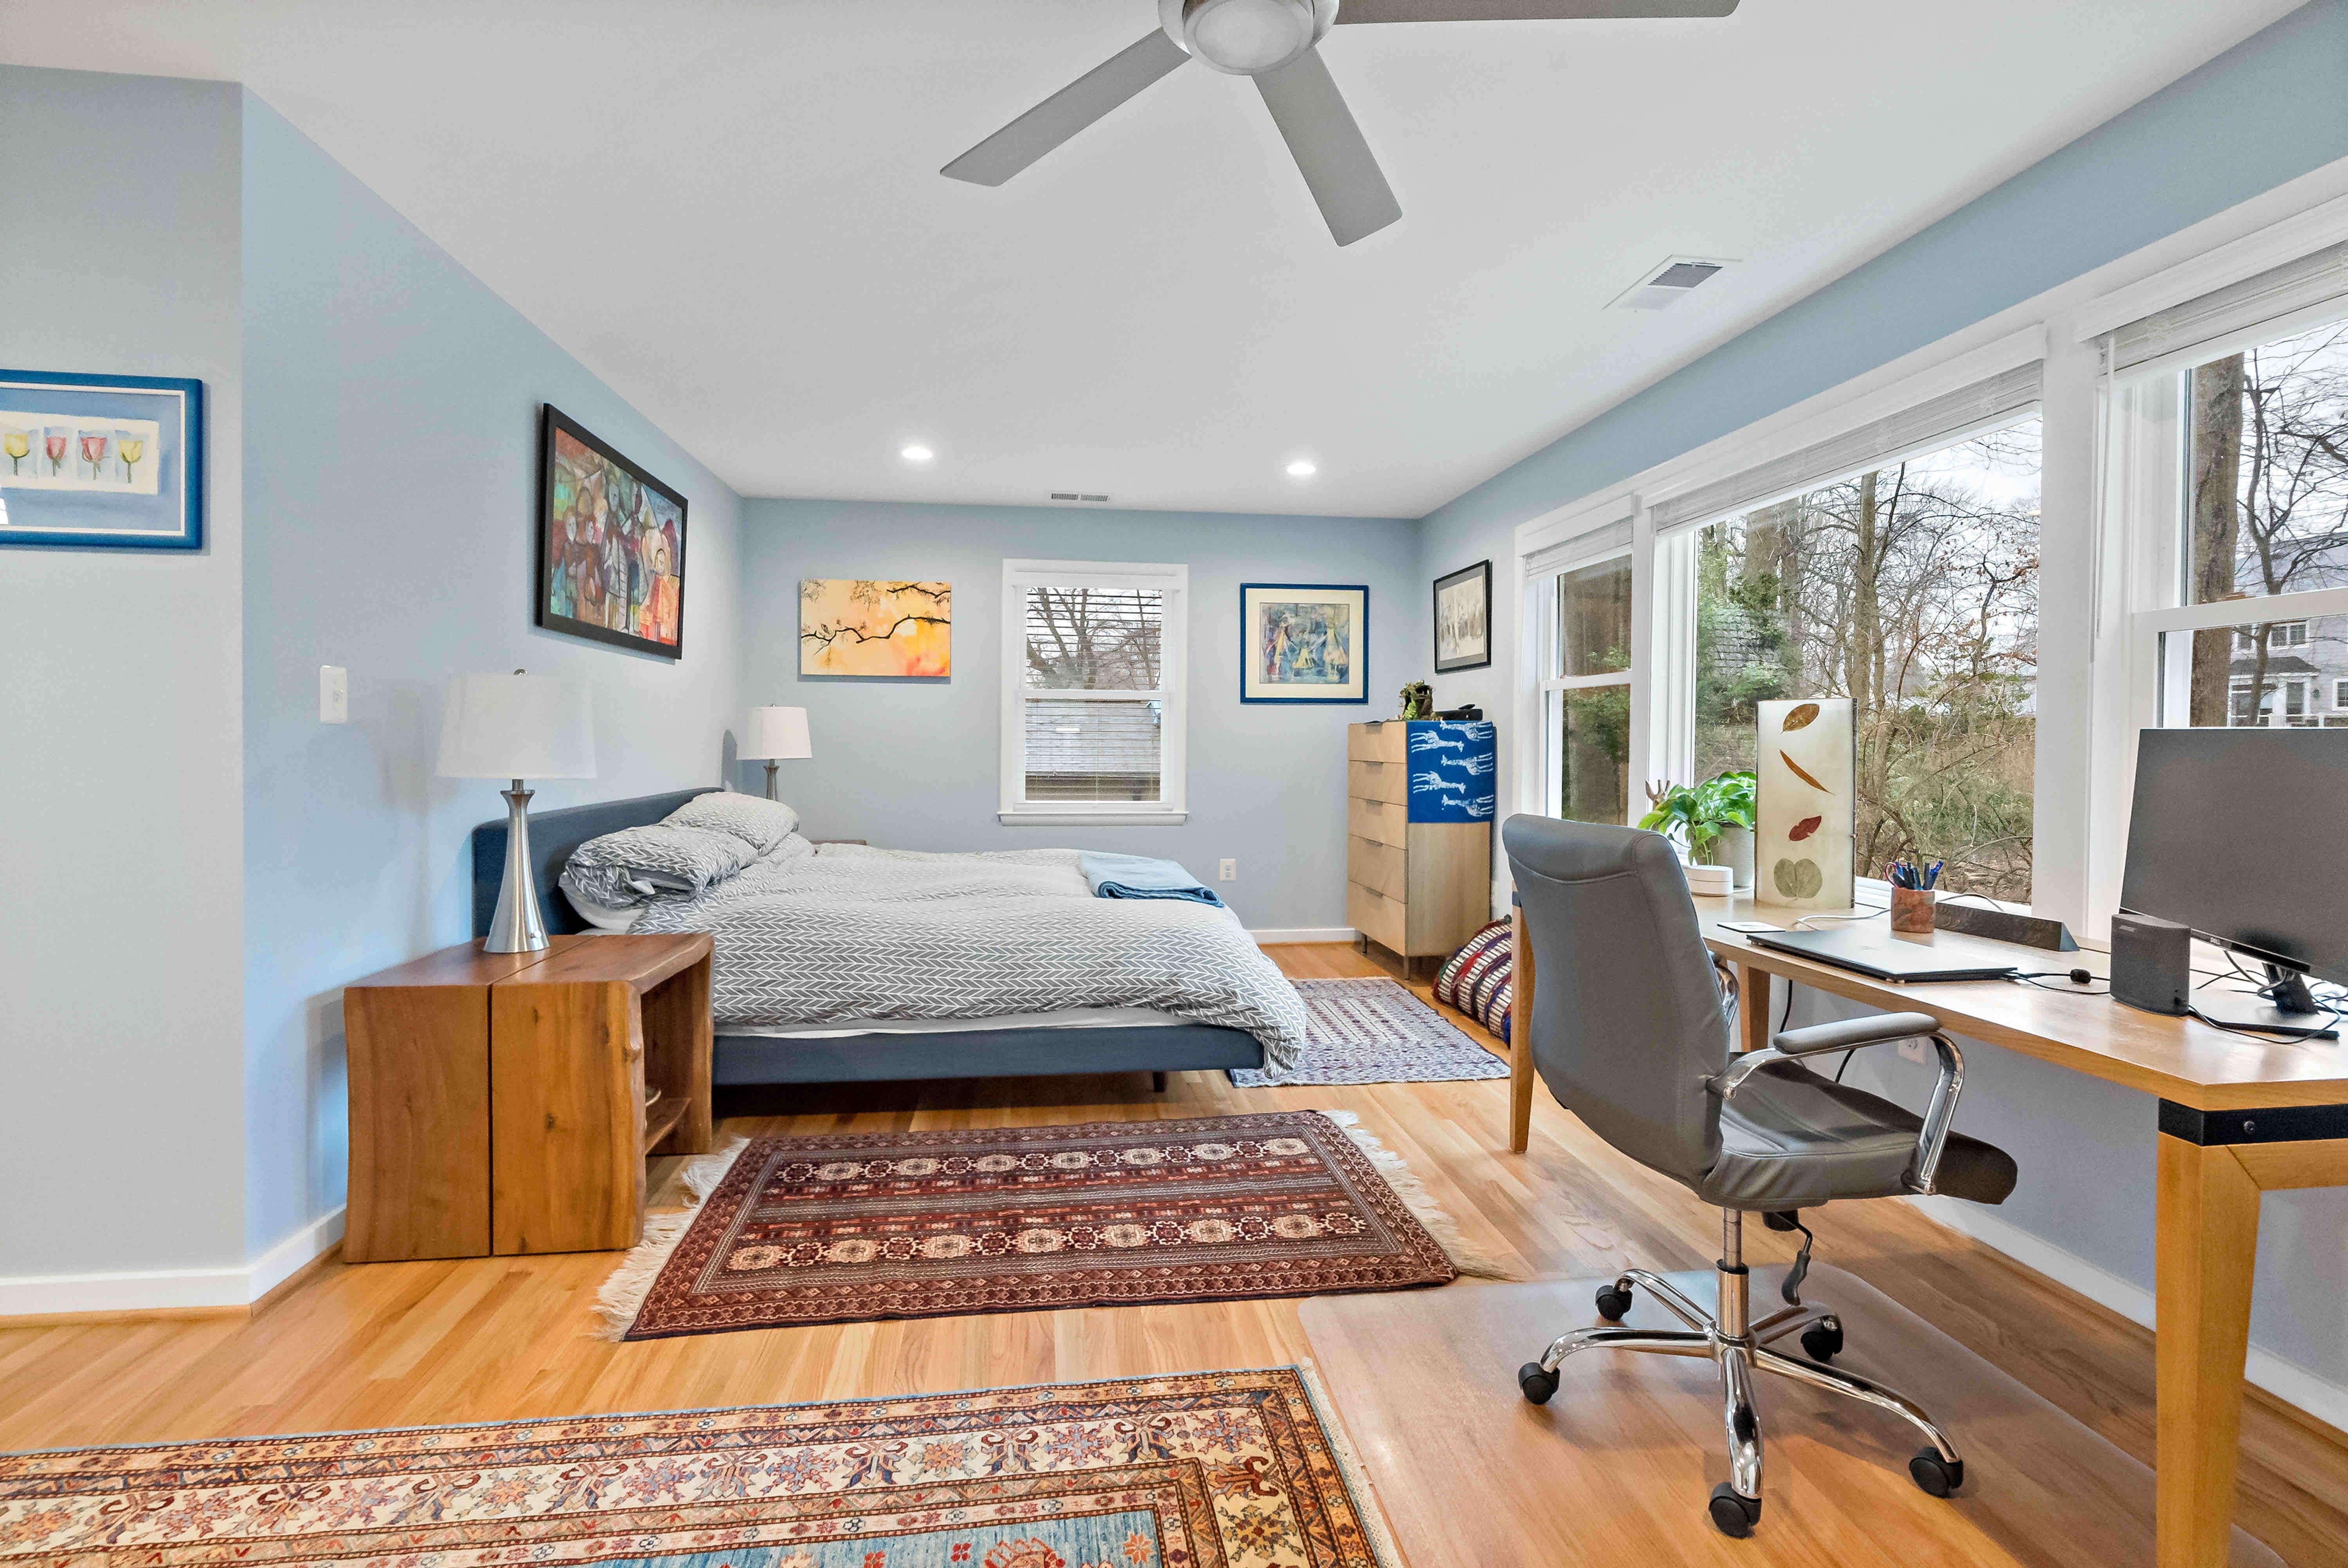 Hardwood floor bedroom with light blue walls and ceiling fan